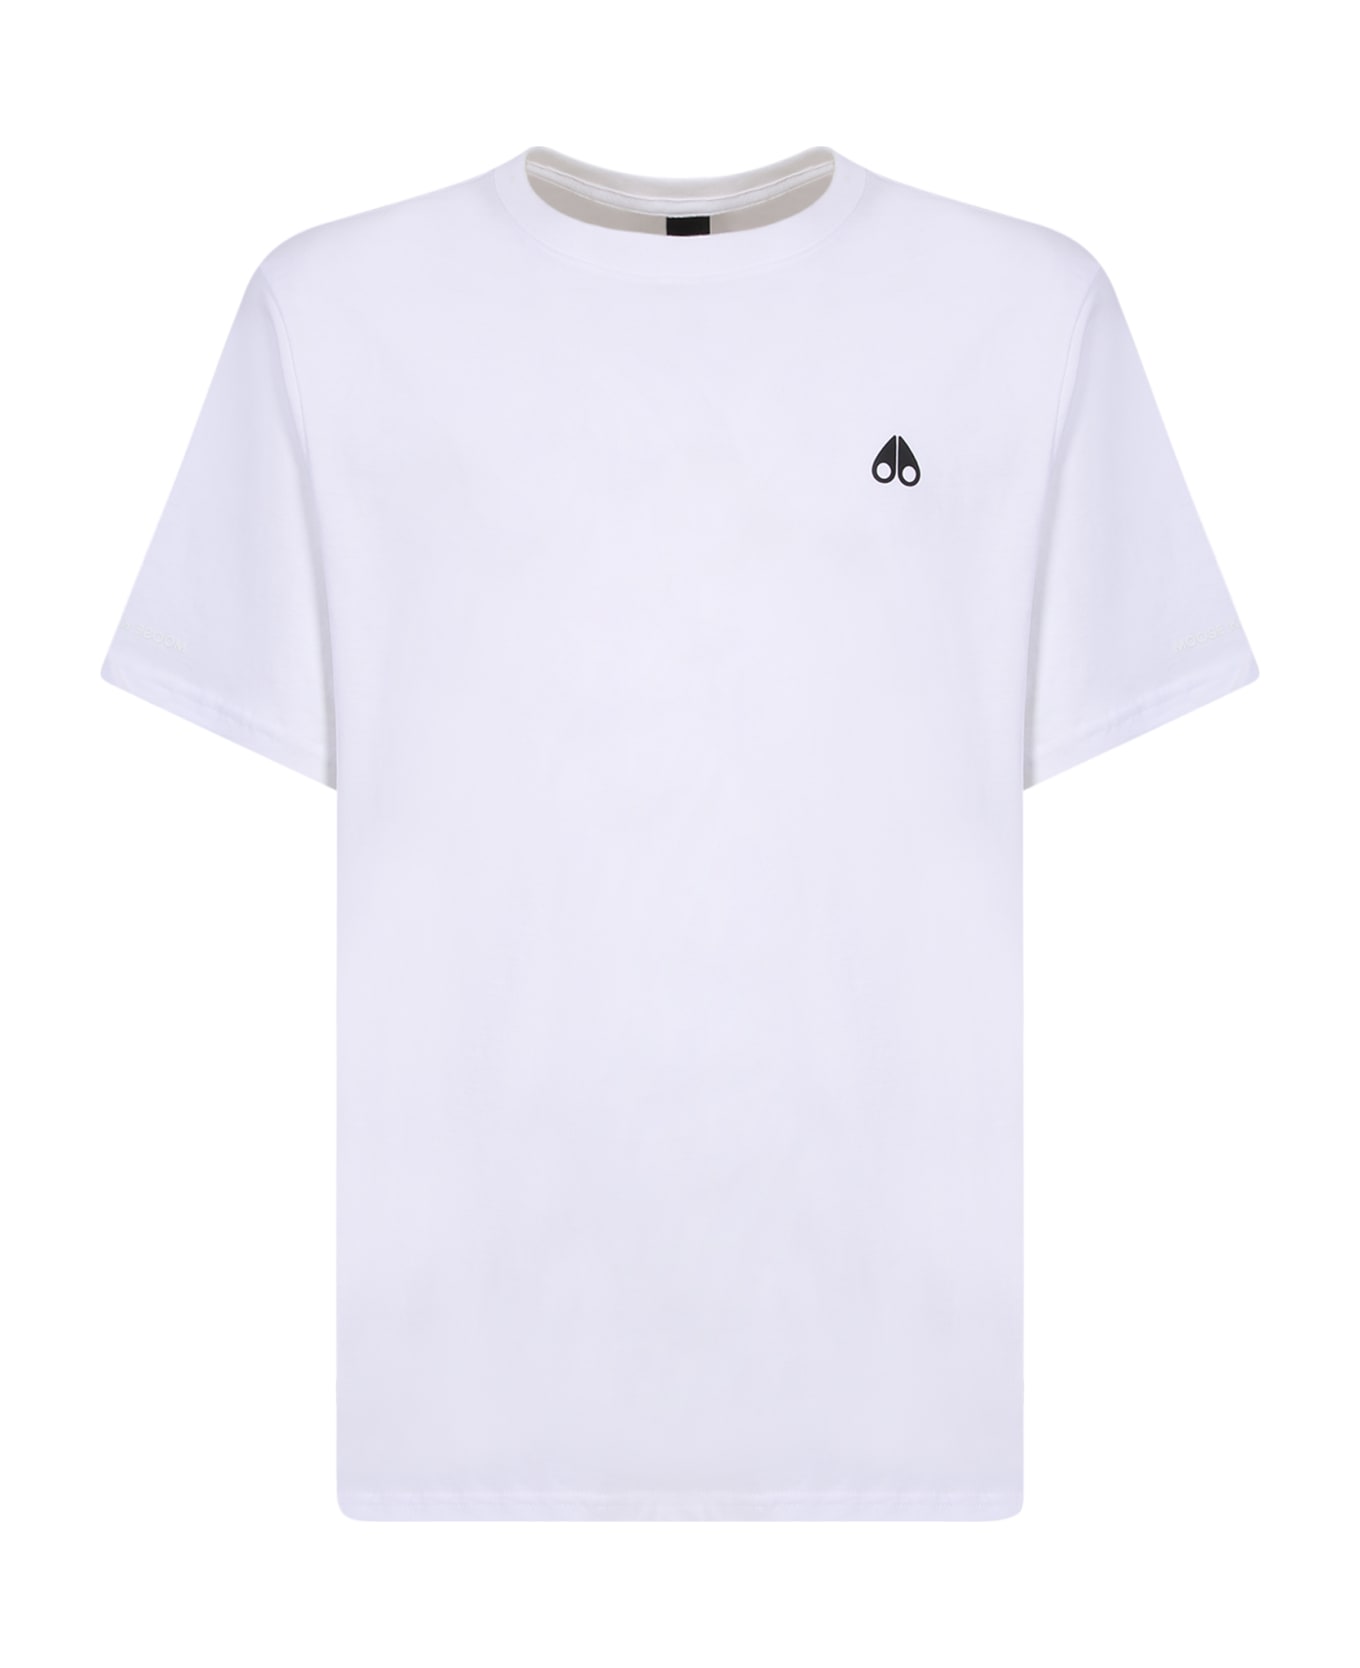 Moose Knuckles White Satellite T-shirt - White